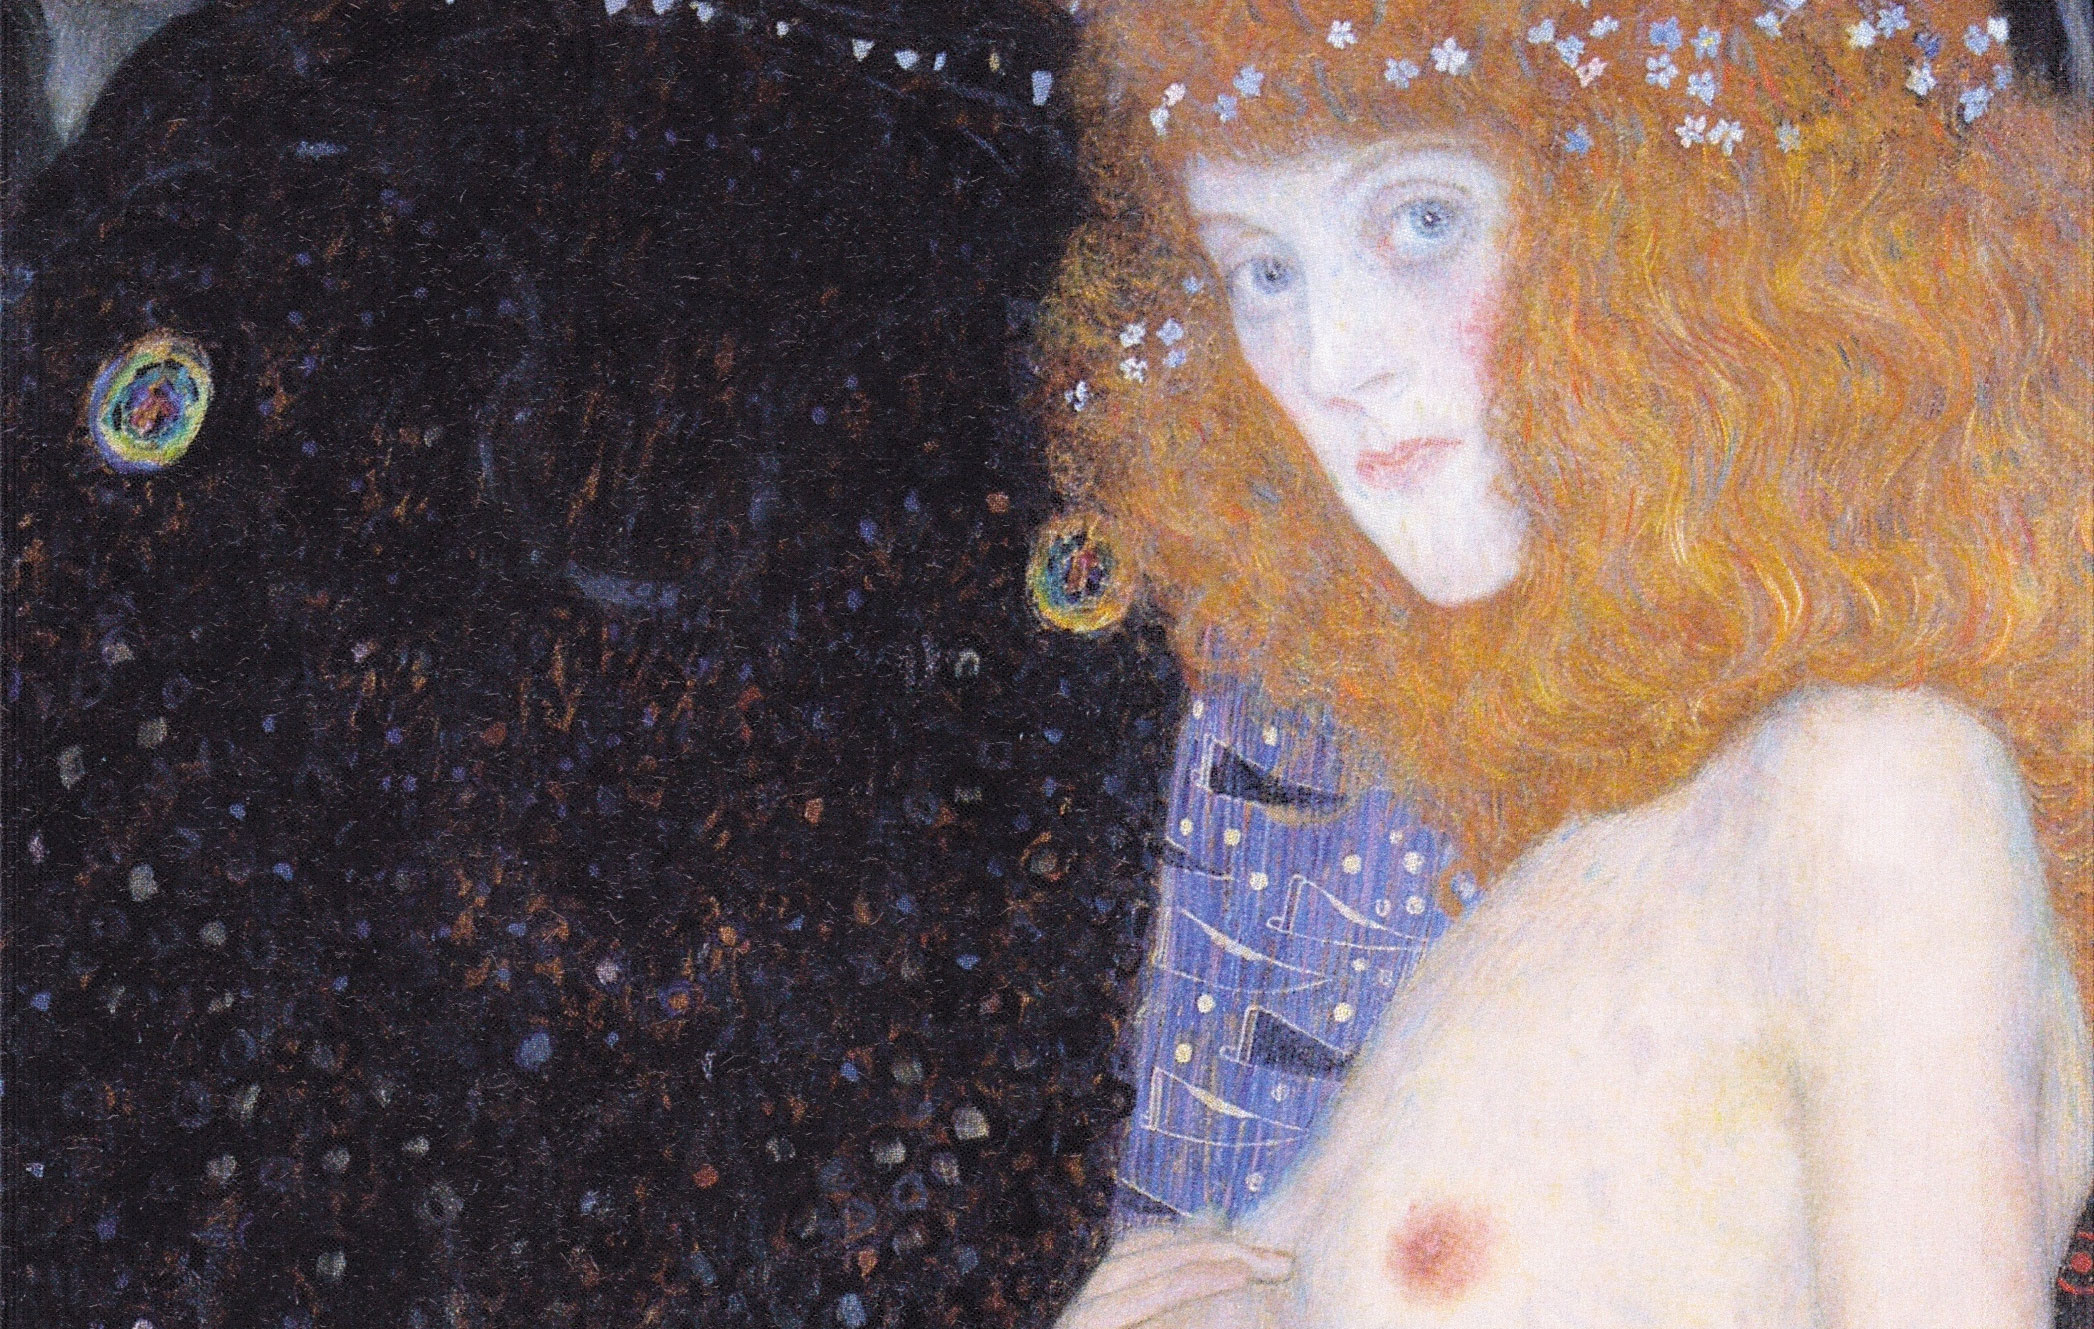 dettaglio - detail - Speranza I - Hope 1 - Gustav Klimt